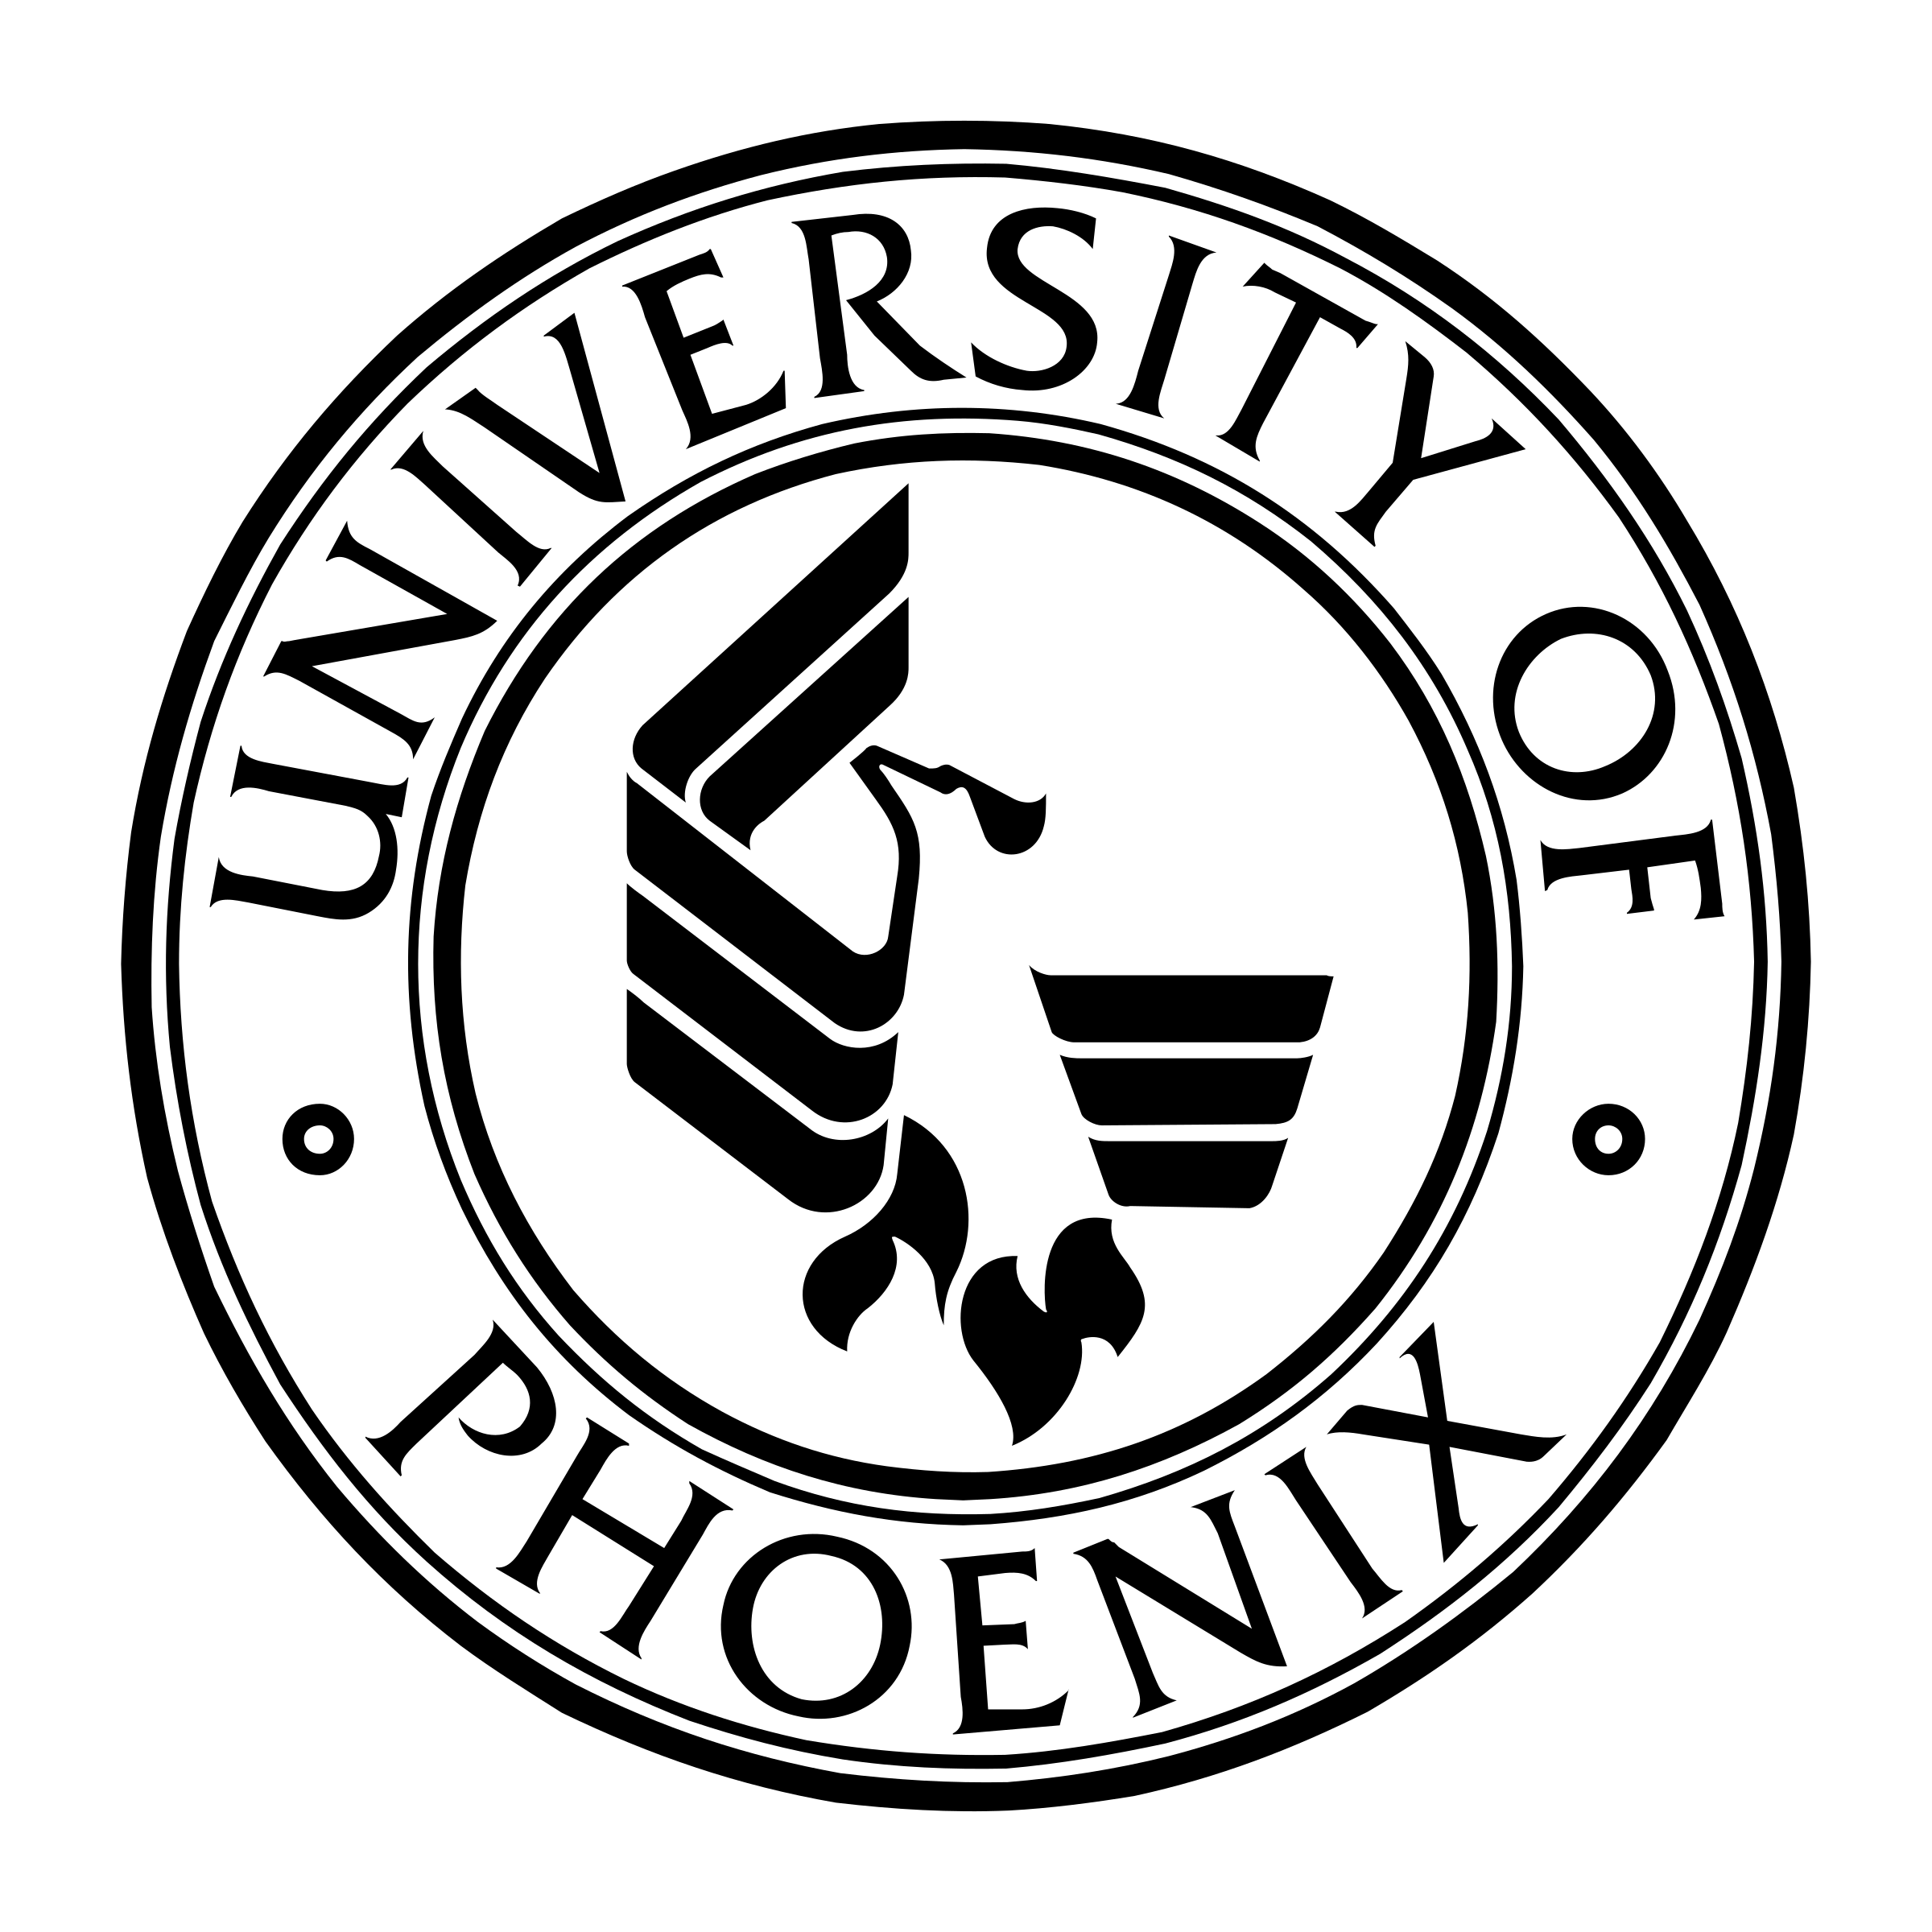 UOPX Logo - University of Phoenix Logo PNG Transparent & SVG Vector - Freebie Supply